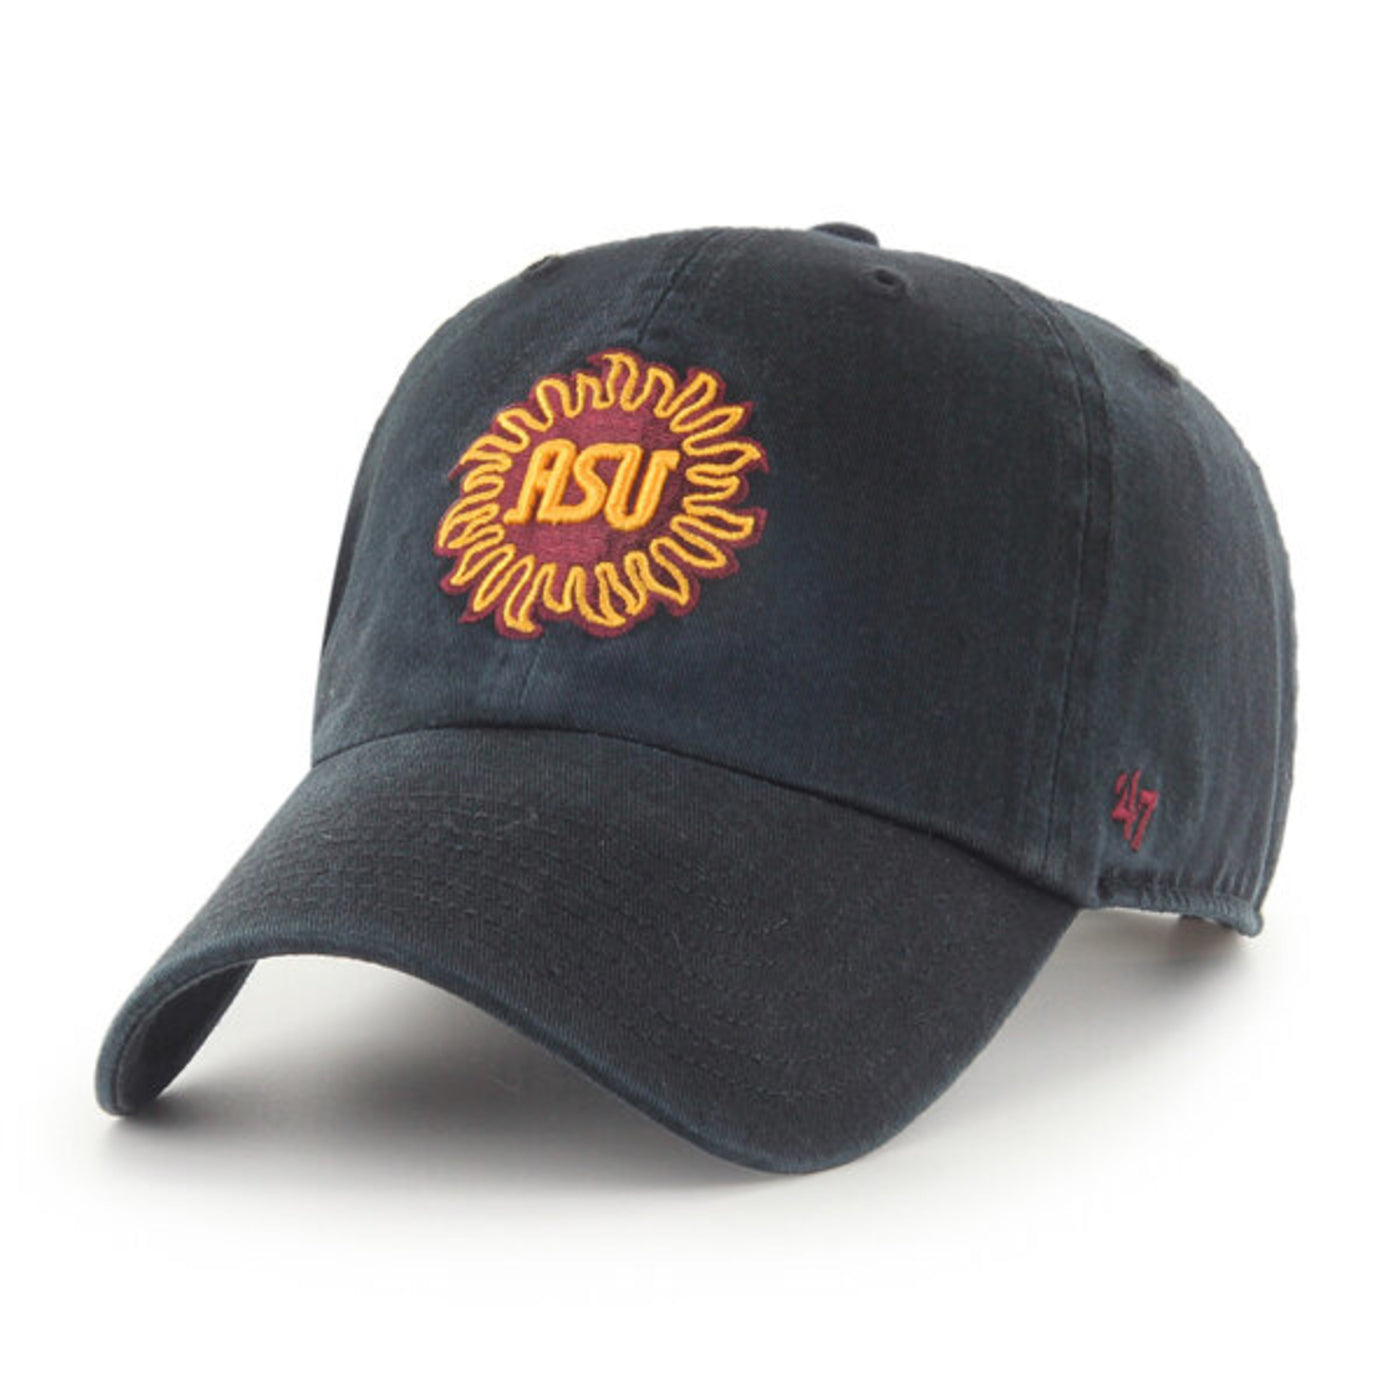 ASU black hat with the sunburst asu logo in gold